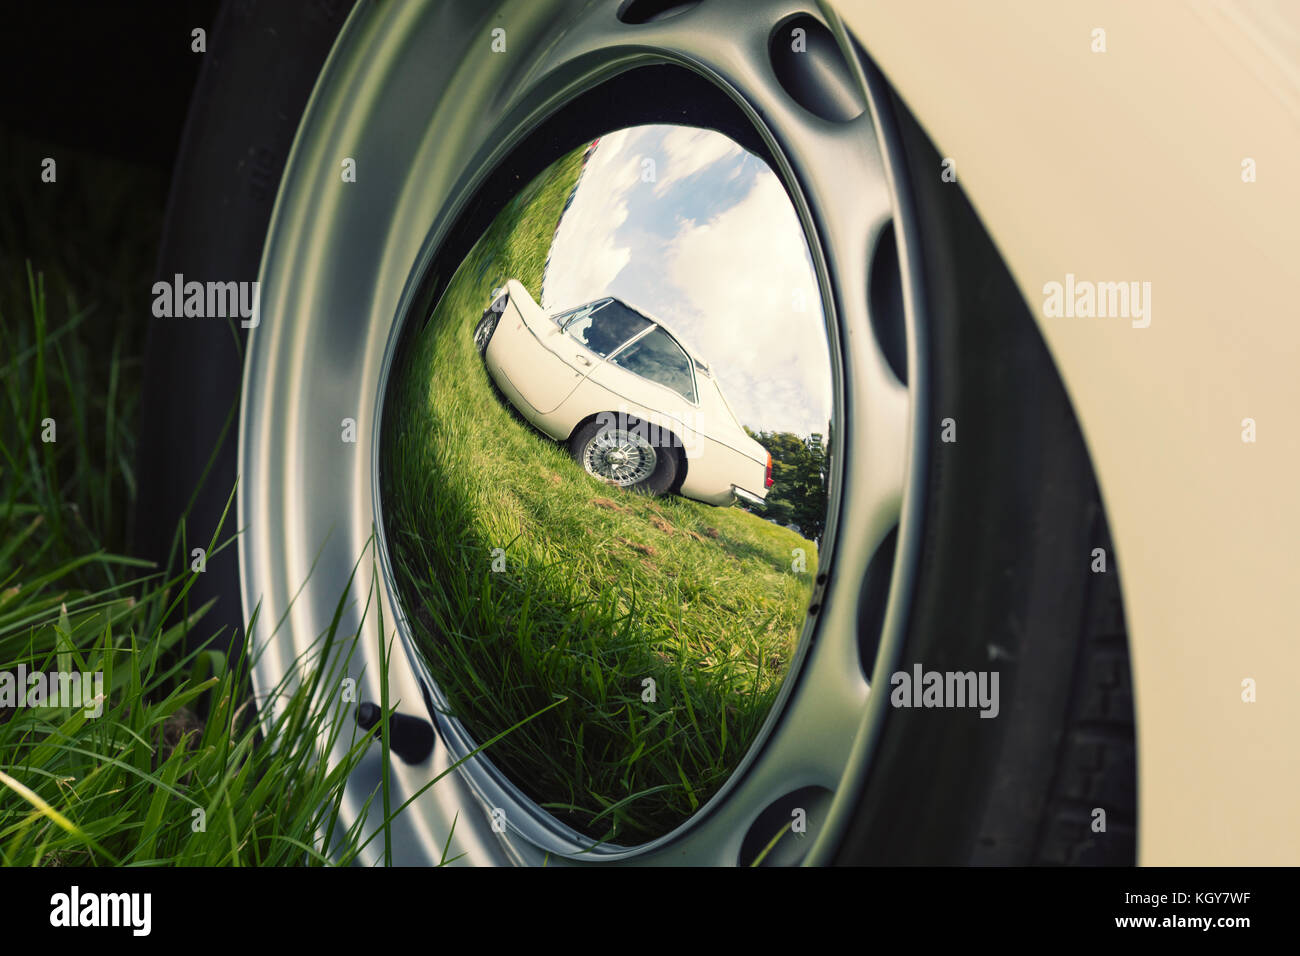 wheel cap reflection Stock Photo